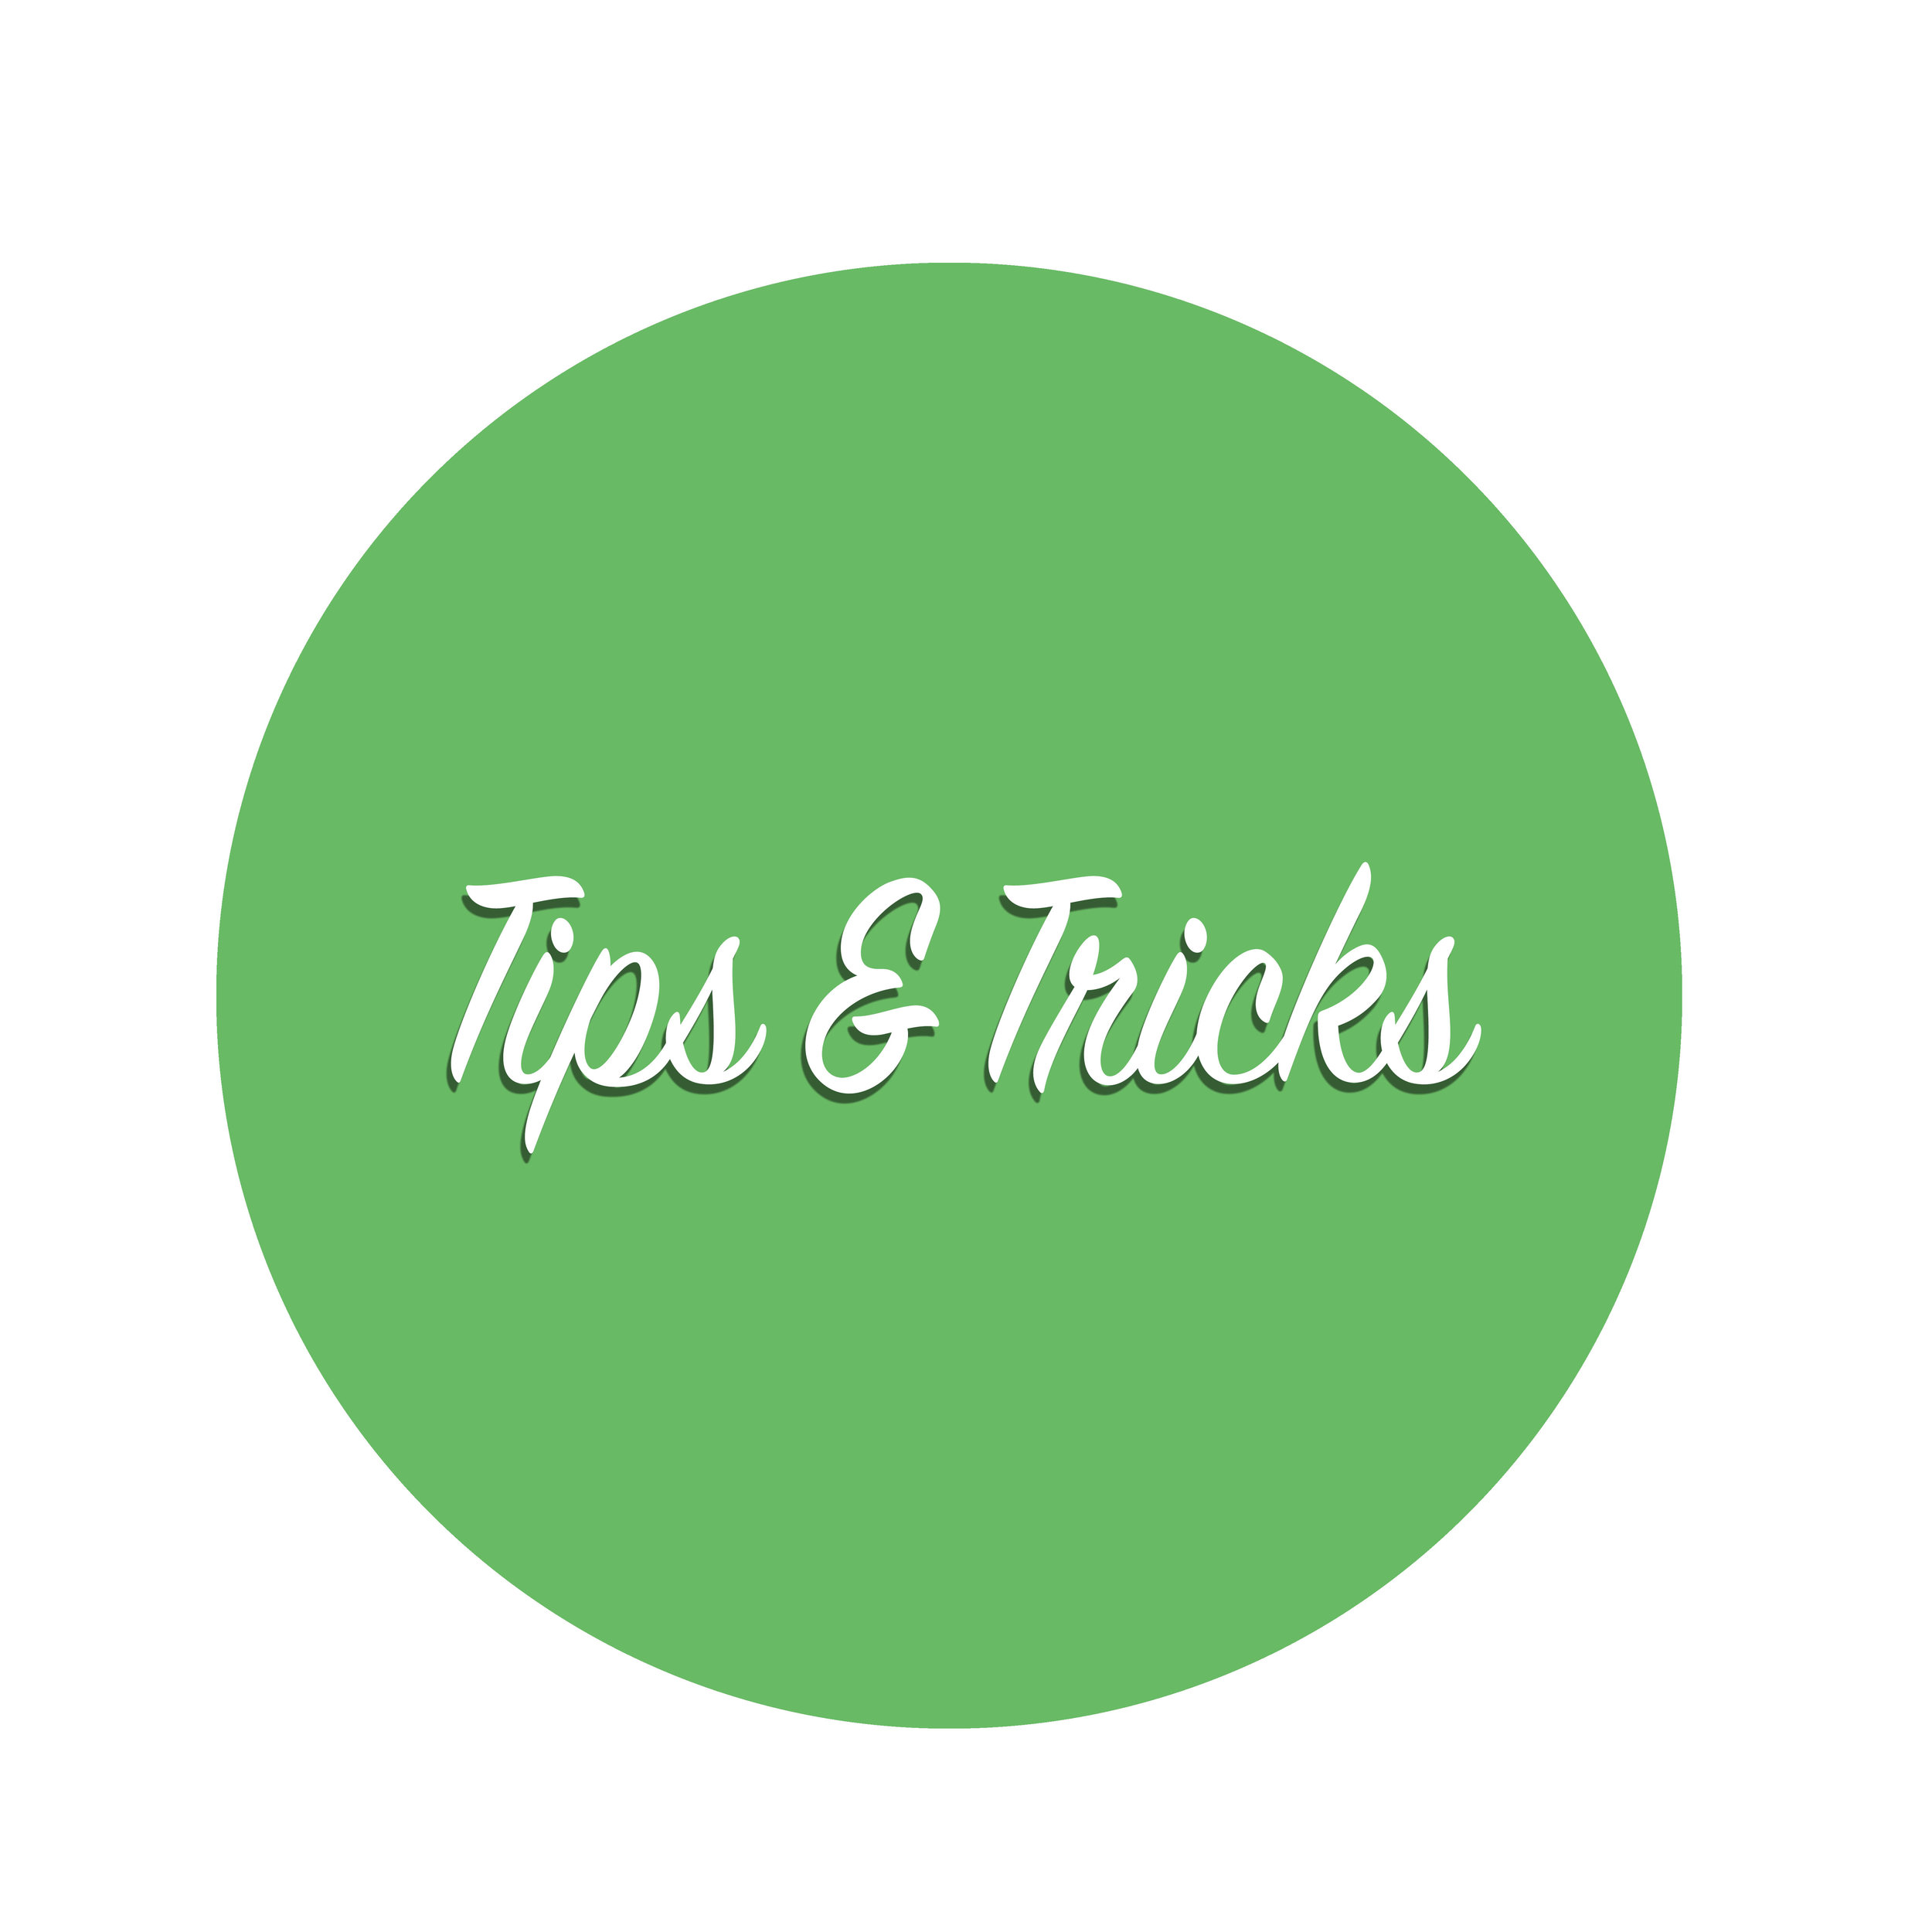 tips and tricks.jpg